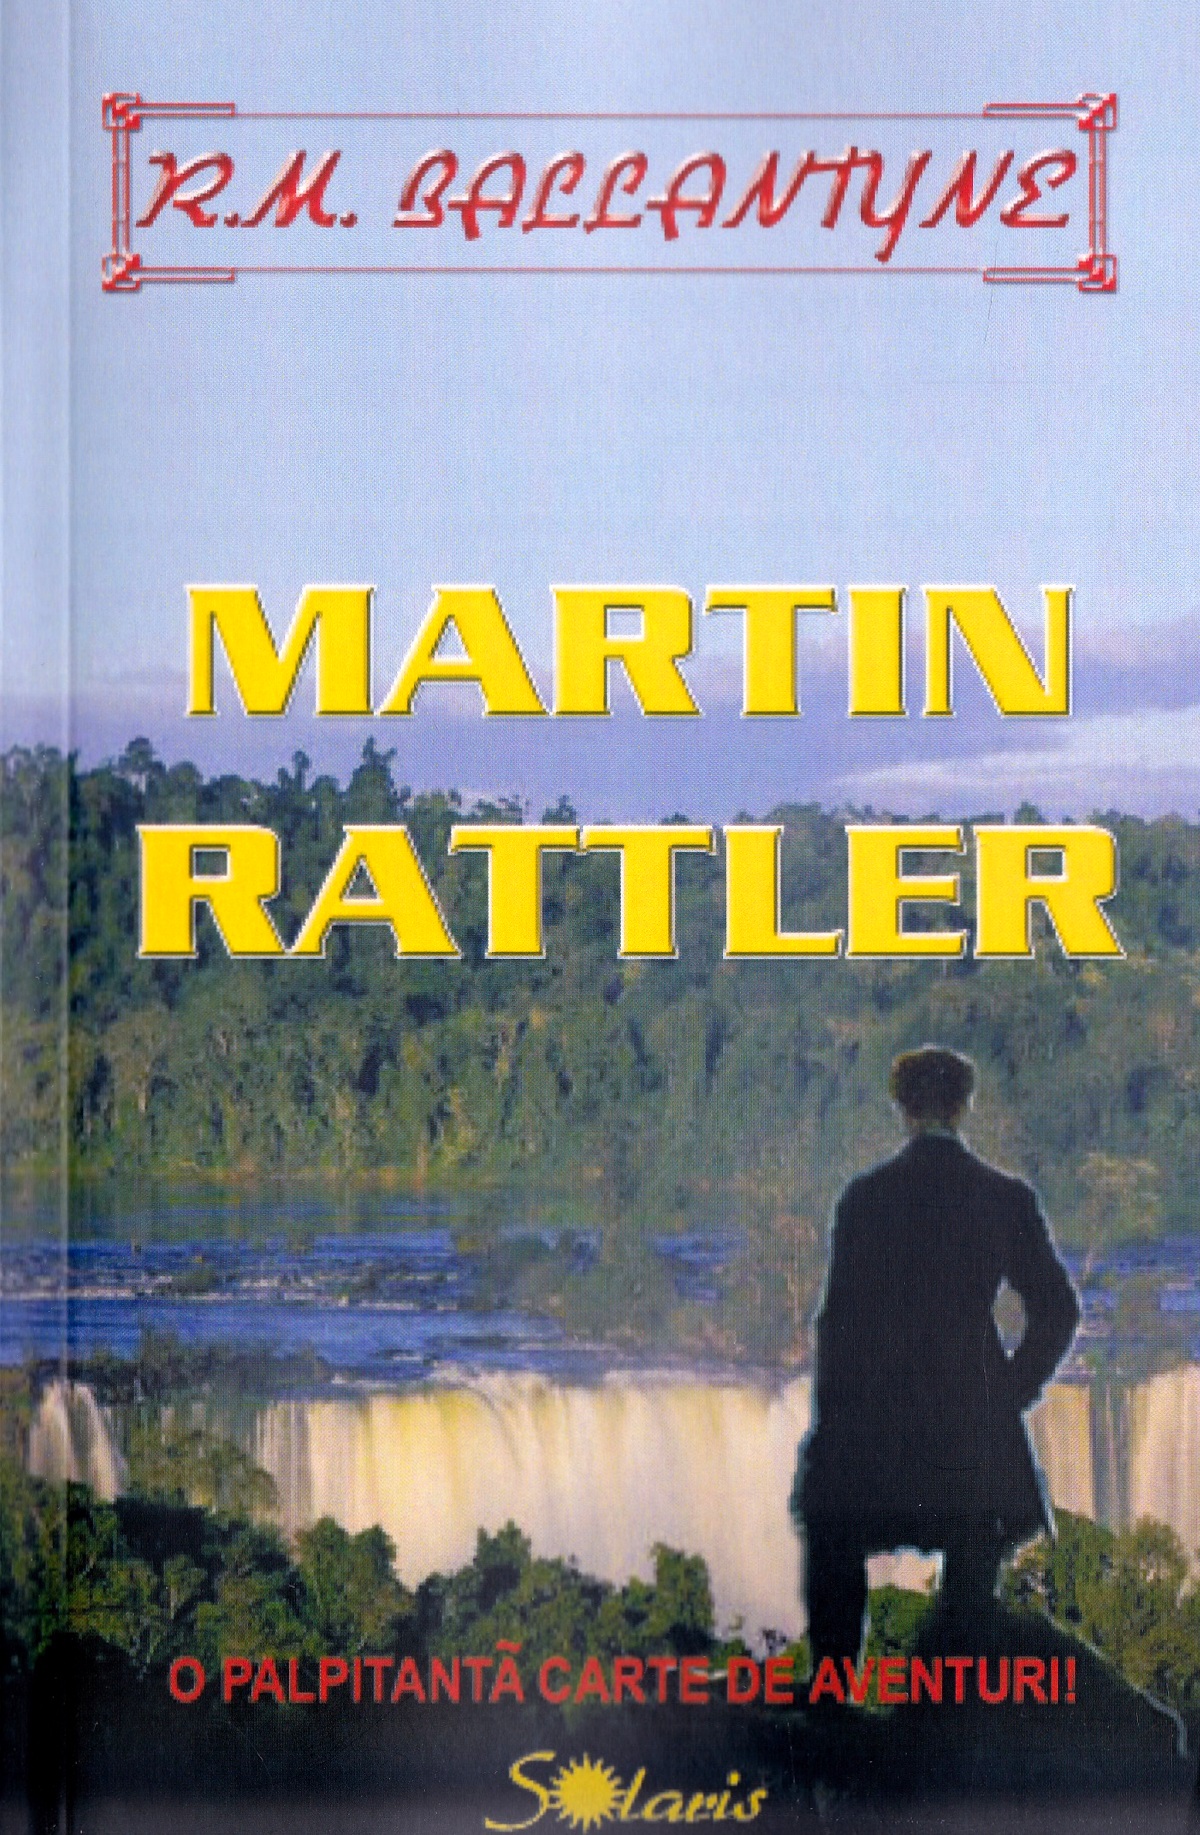 Martin Rattler - R.M. Ballantyne